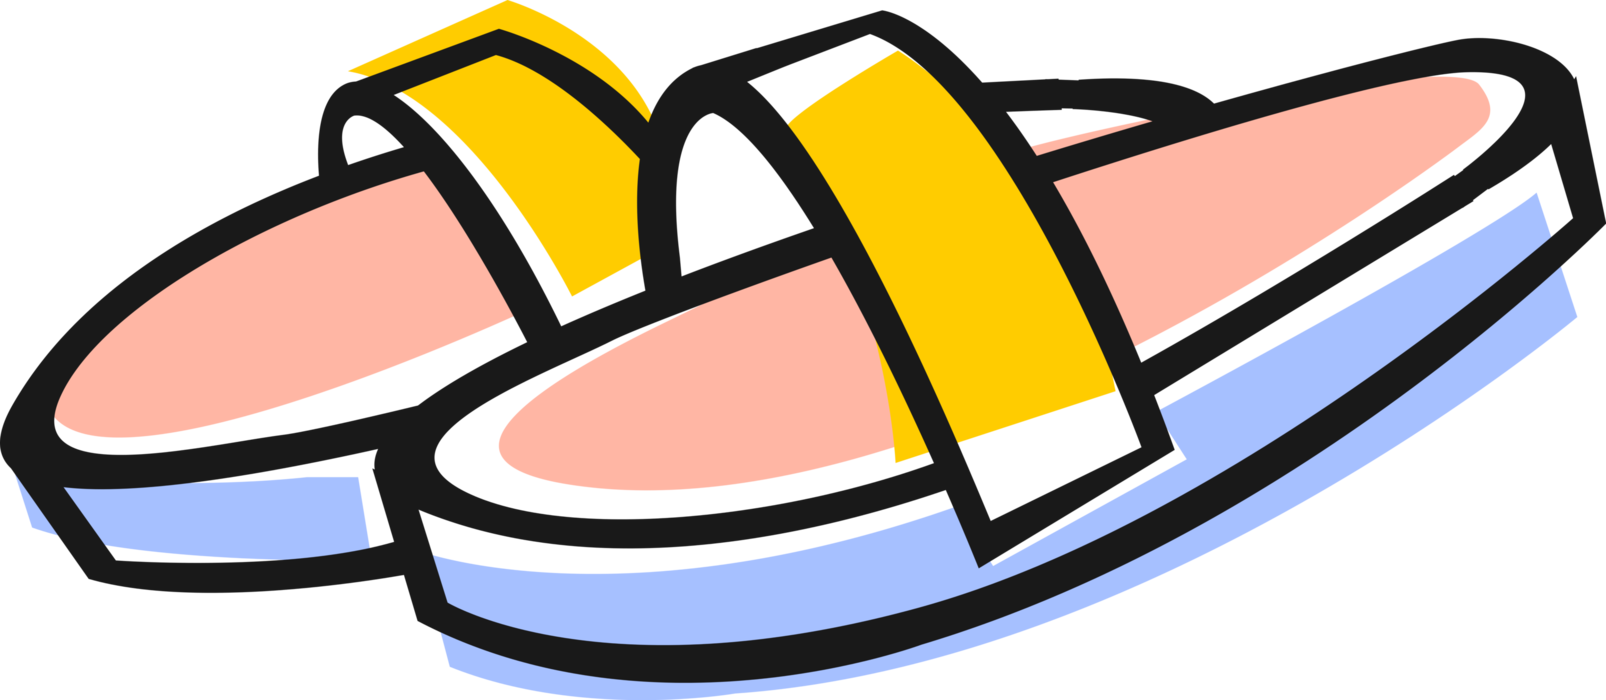 Vector Illustration Of Sandals, Thong Flip-flops Or - Vector Illustration Of Sandals, Thong Flip-flops Or (1606x700)